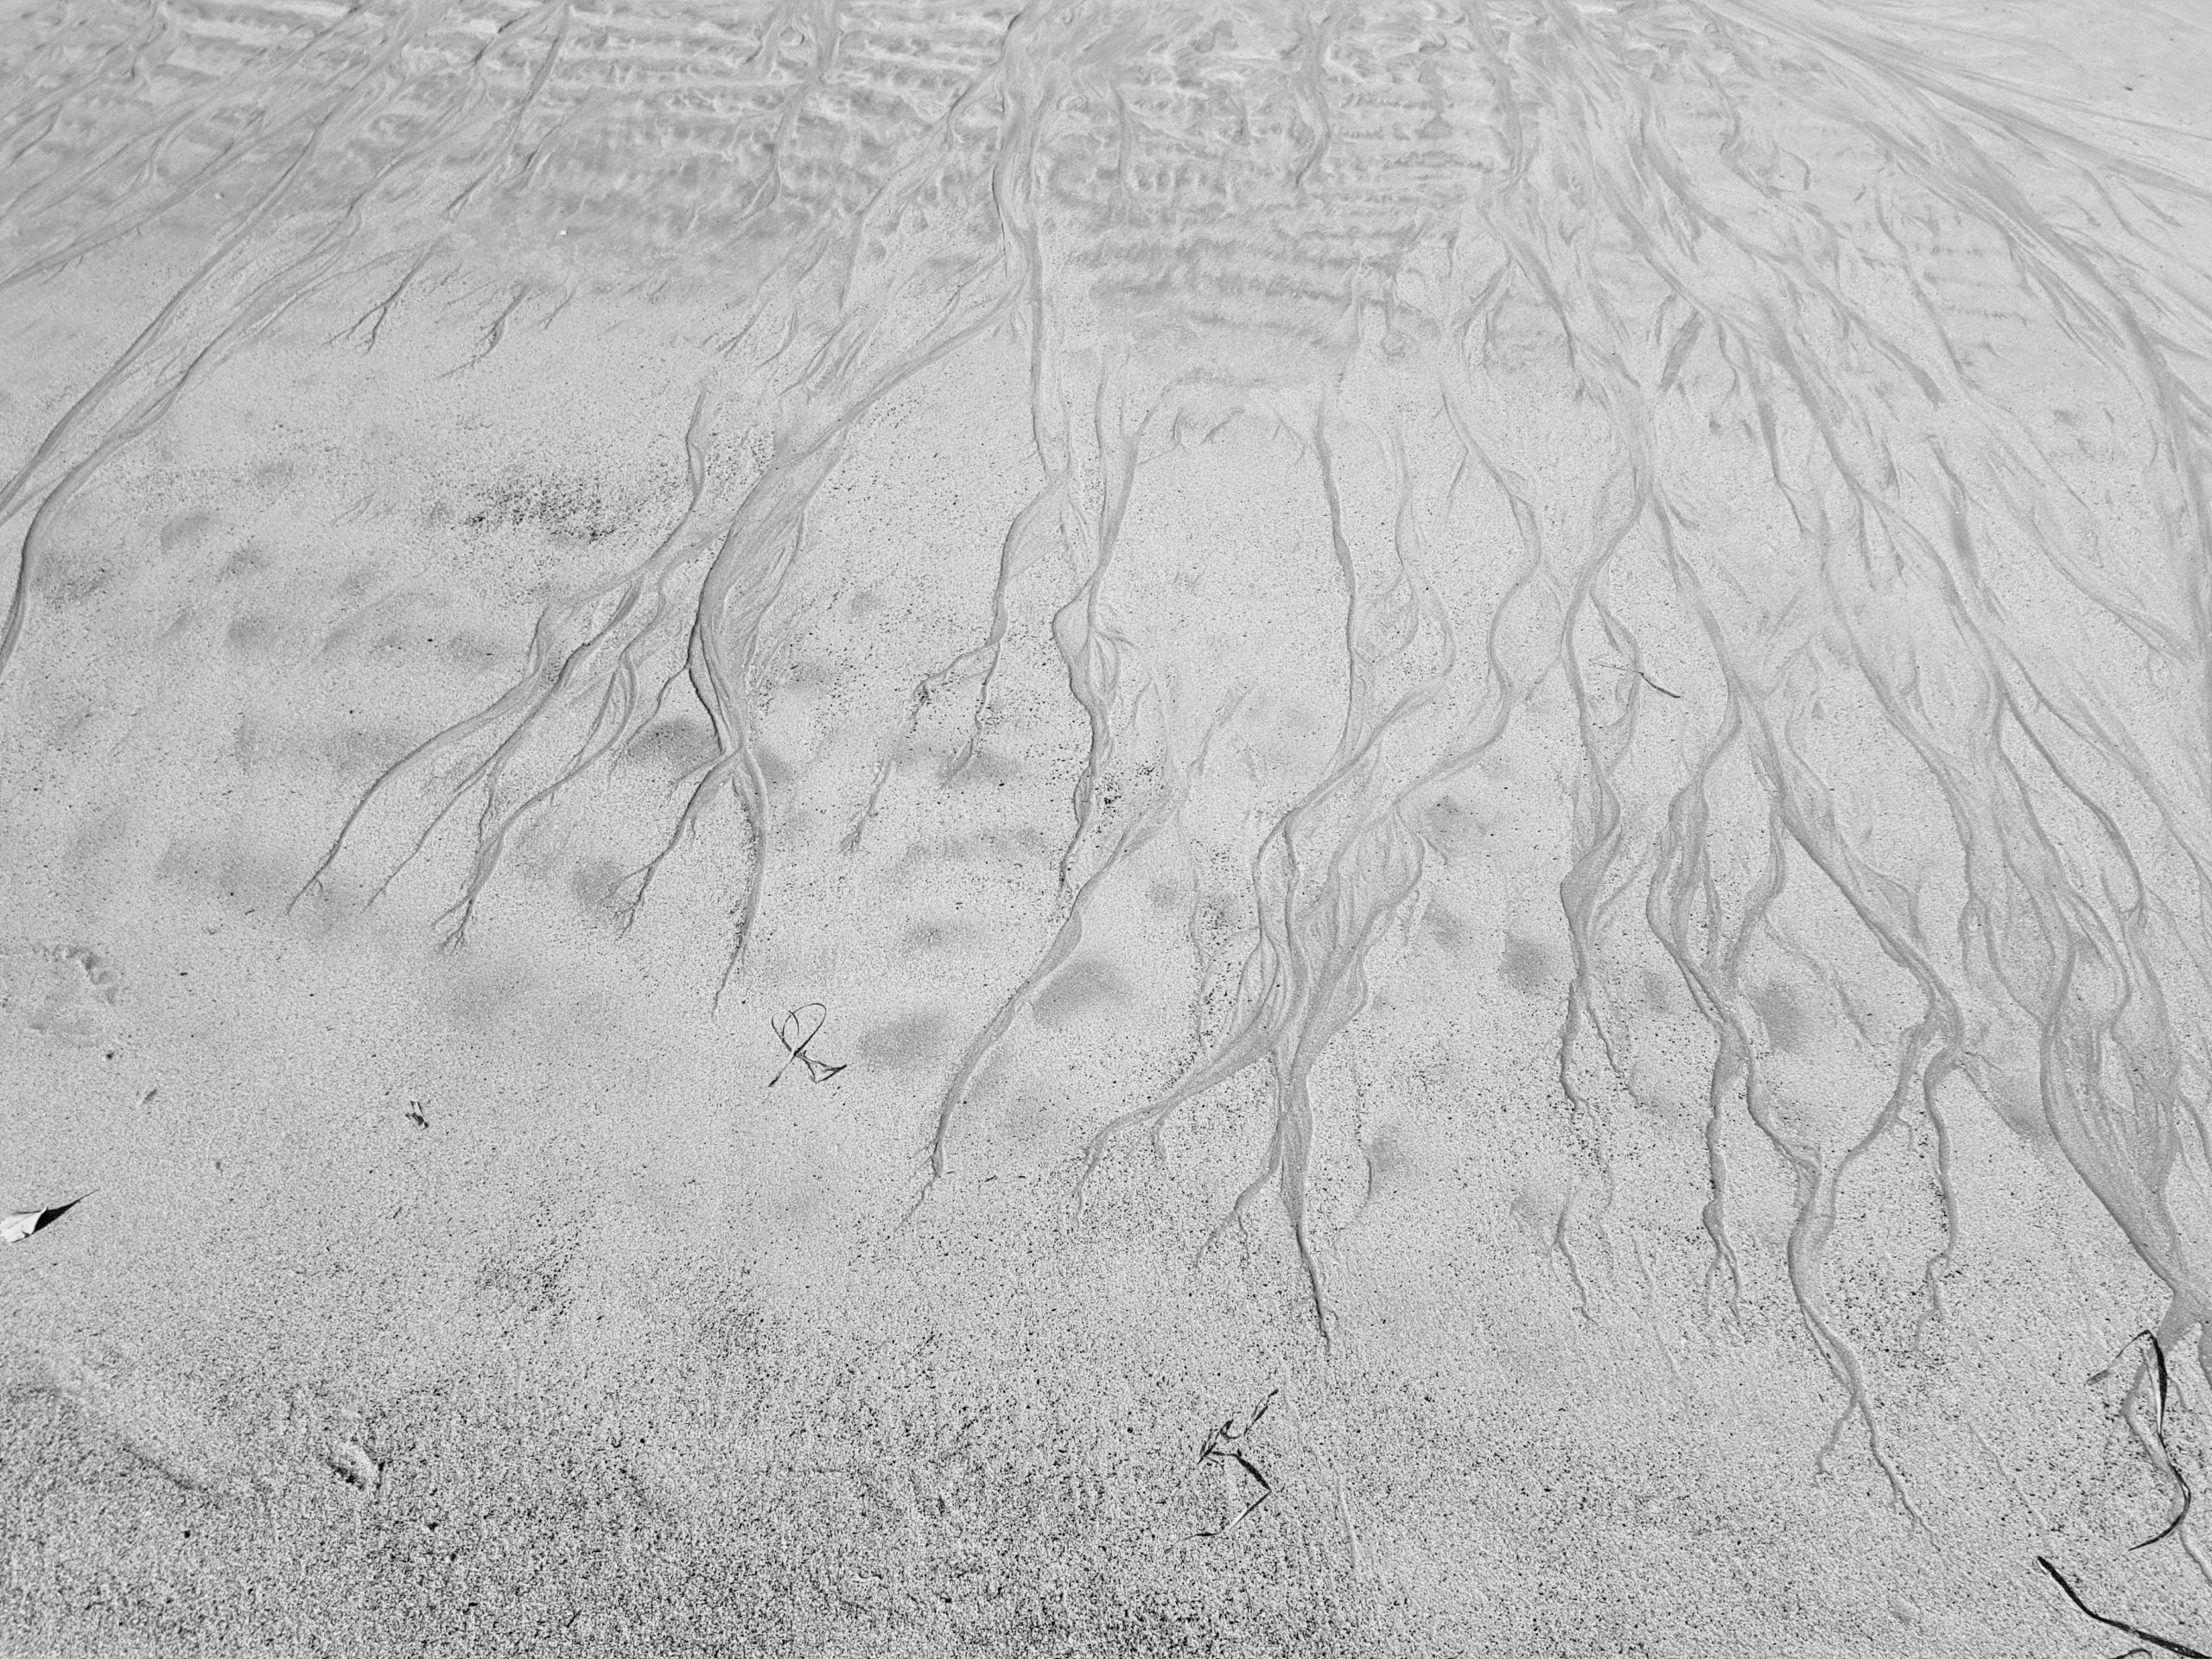 Sand patterns. Umina Beach, NSW, 2020.